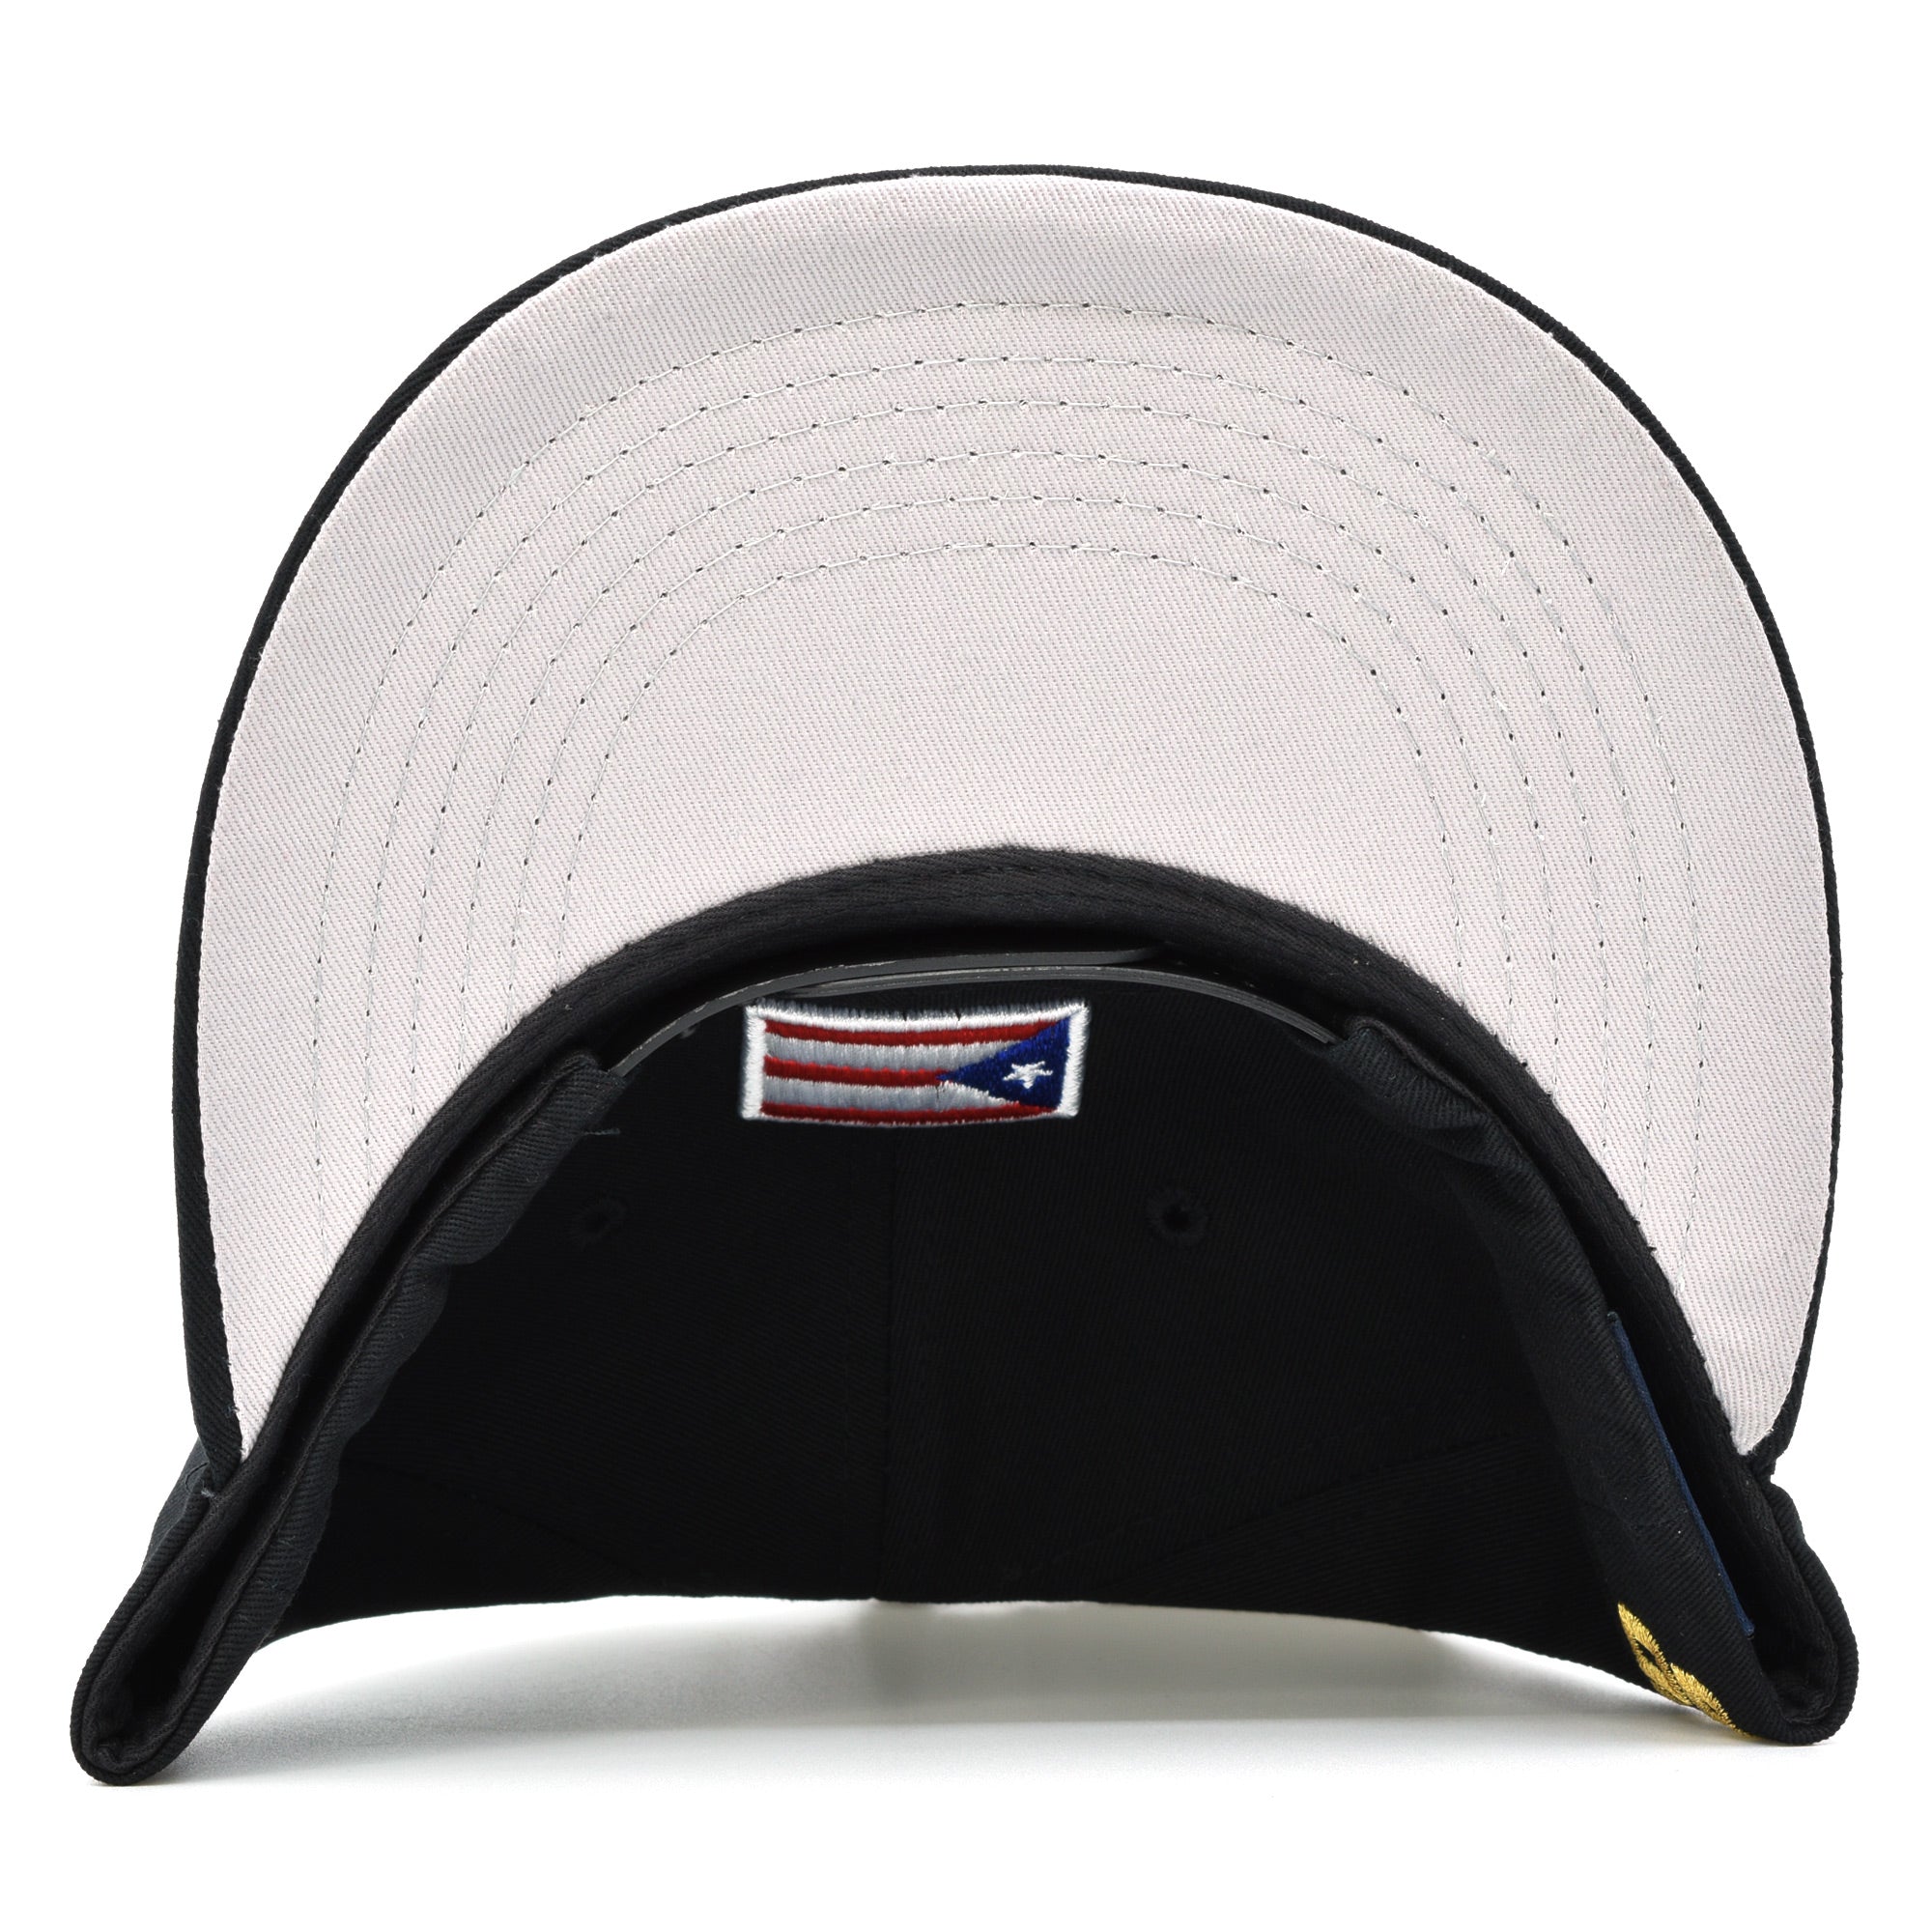 Enichan Puerto Rico Flag Snapback Hats Dad Hat Flat Bill Caps Baseball Cap  for Men Women